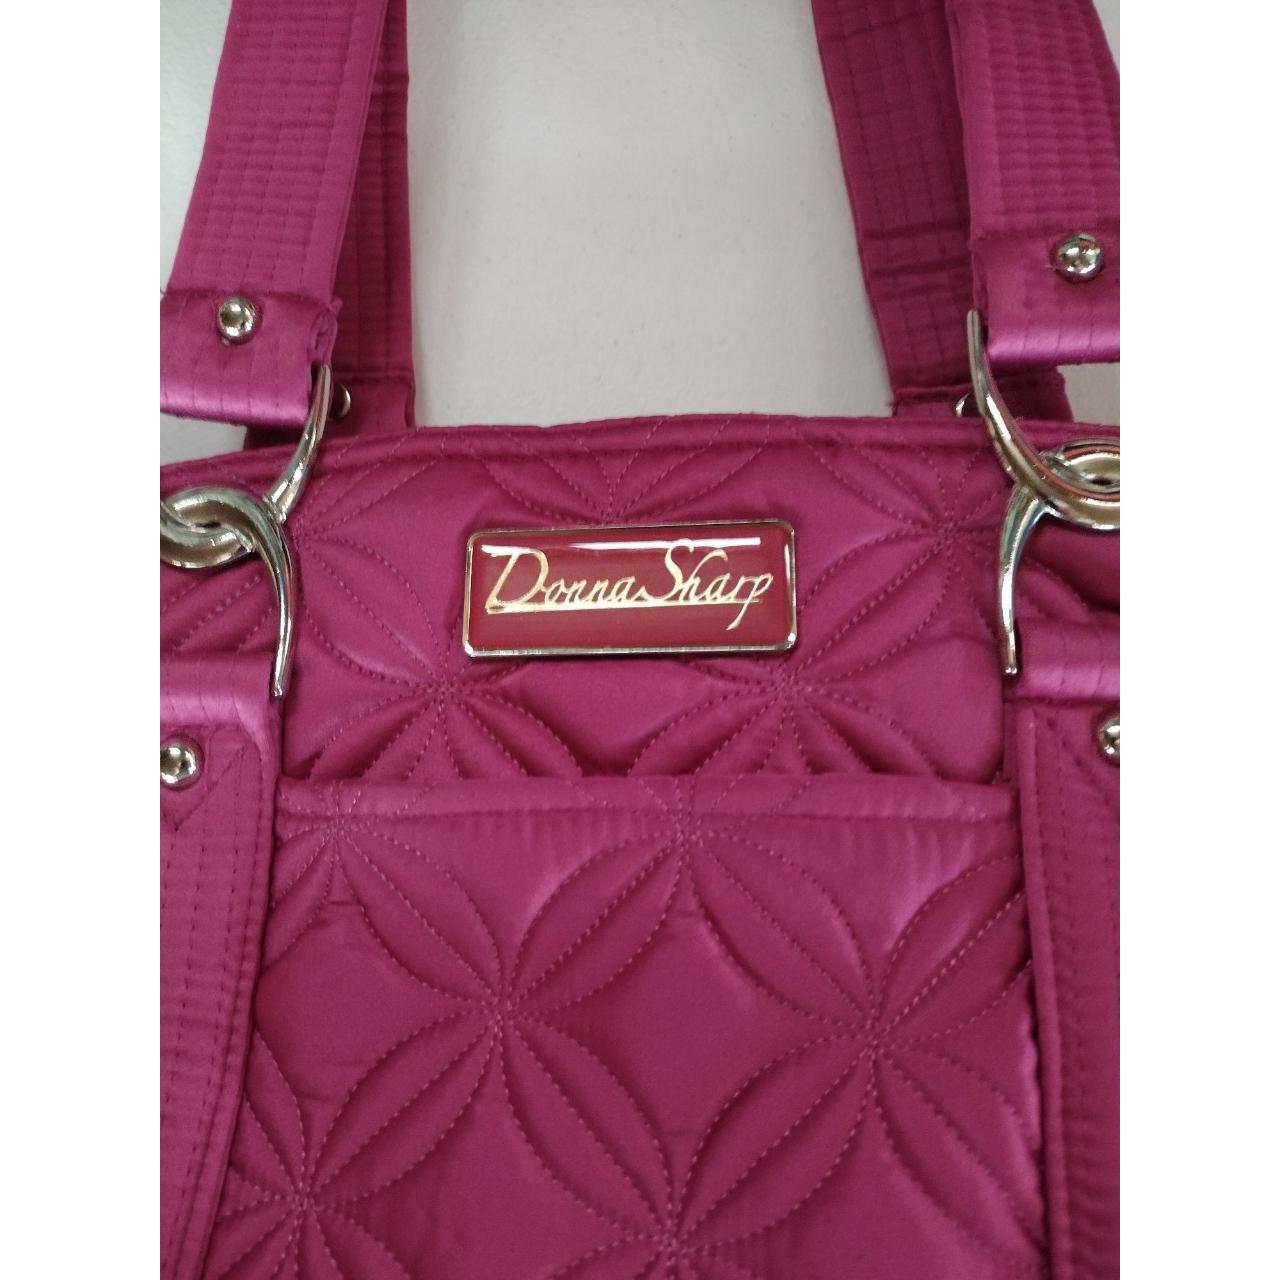 Donna Sharp Women's Pink Bag (3)